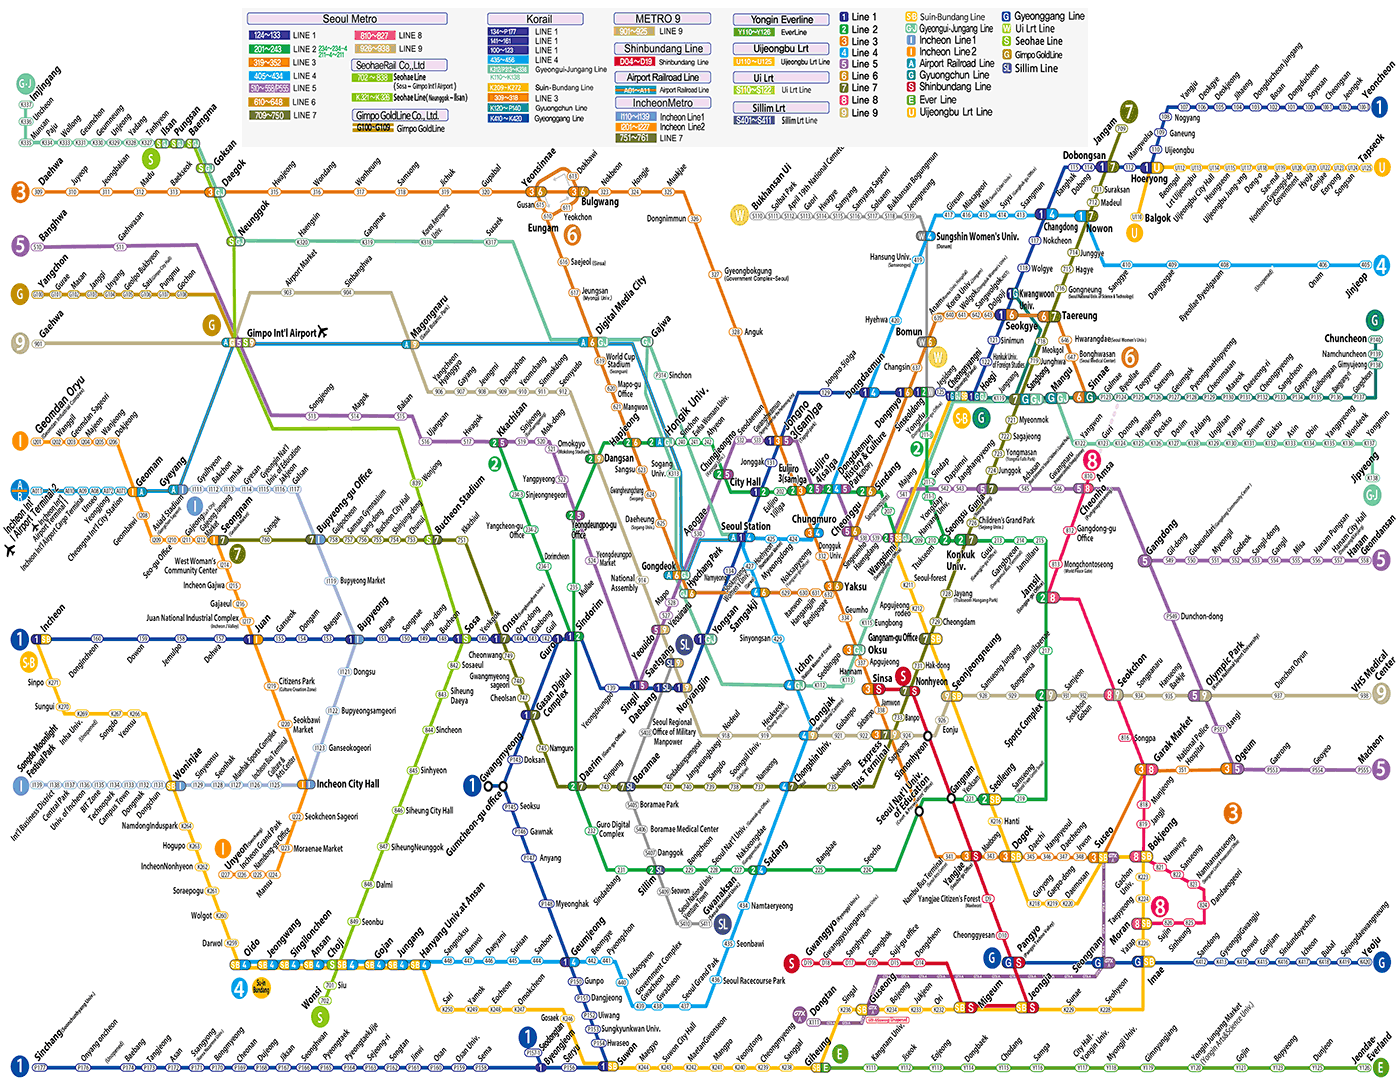 Seoul subway map